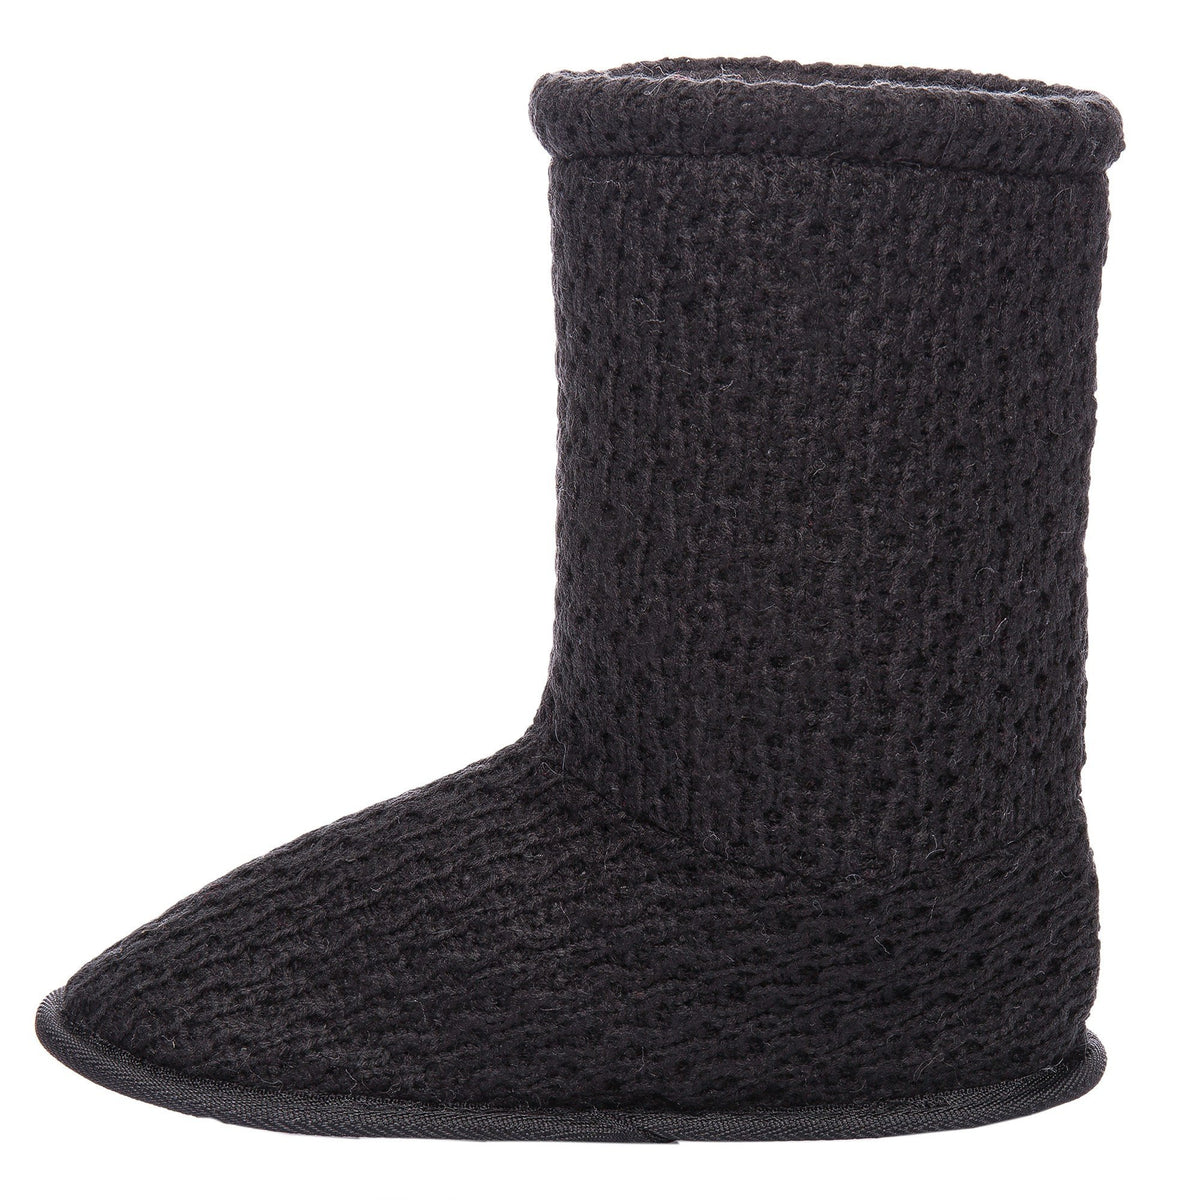 Women's Cozy Crochet Boot Slipper - Black